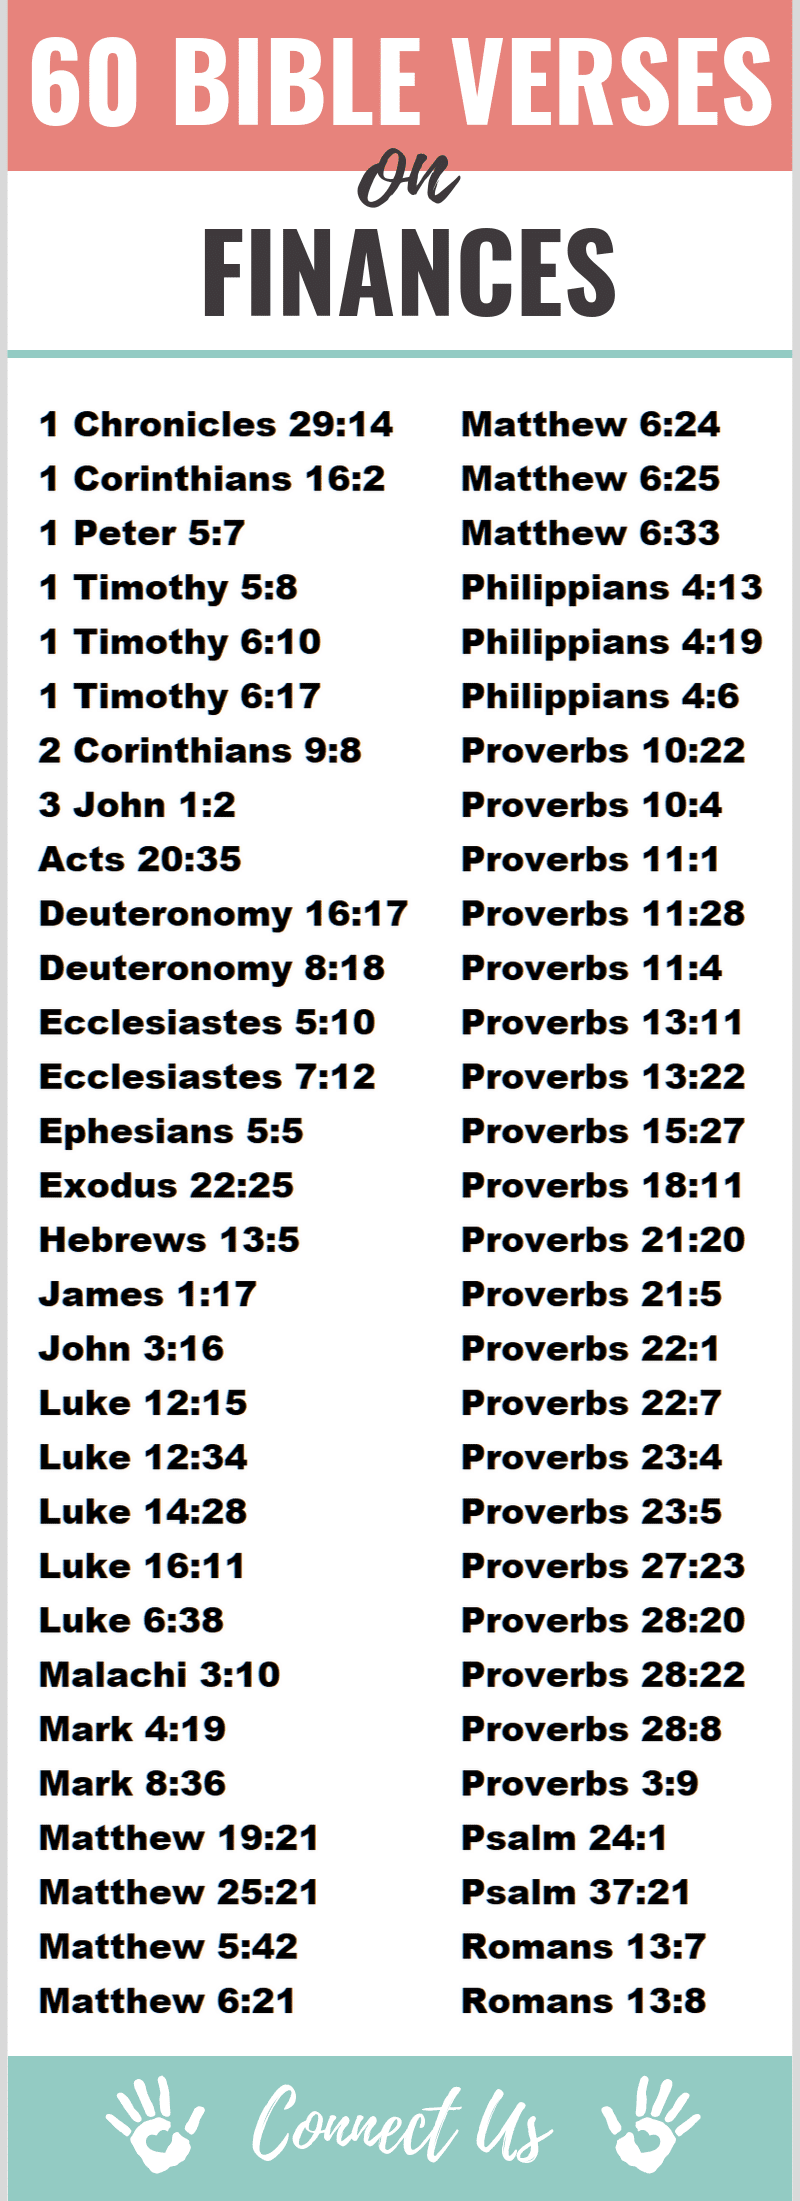 Bible Verses on Finances